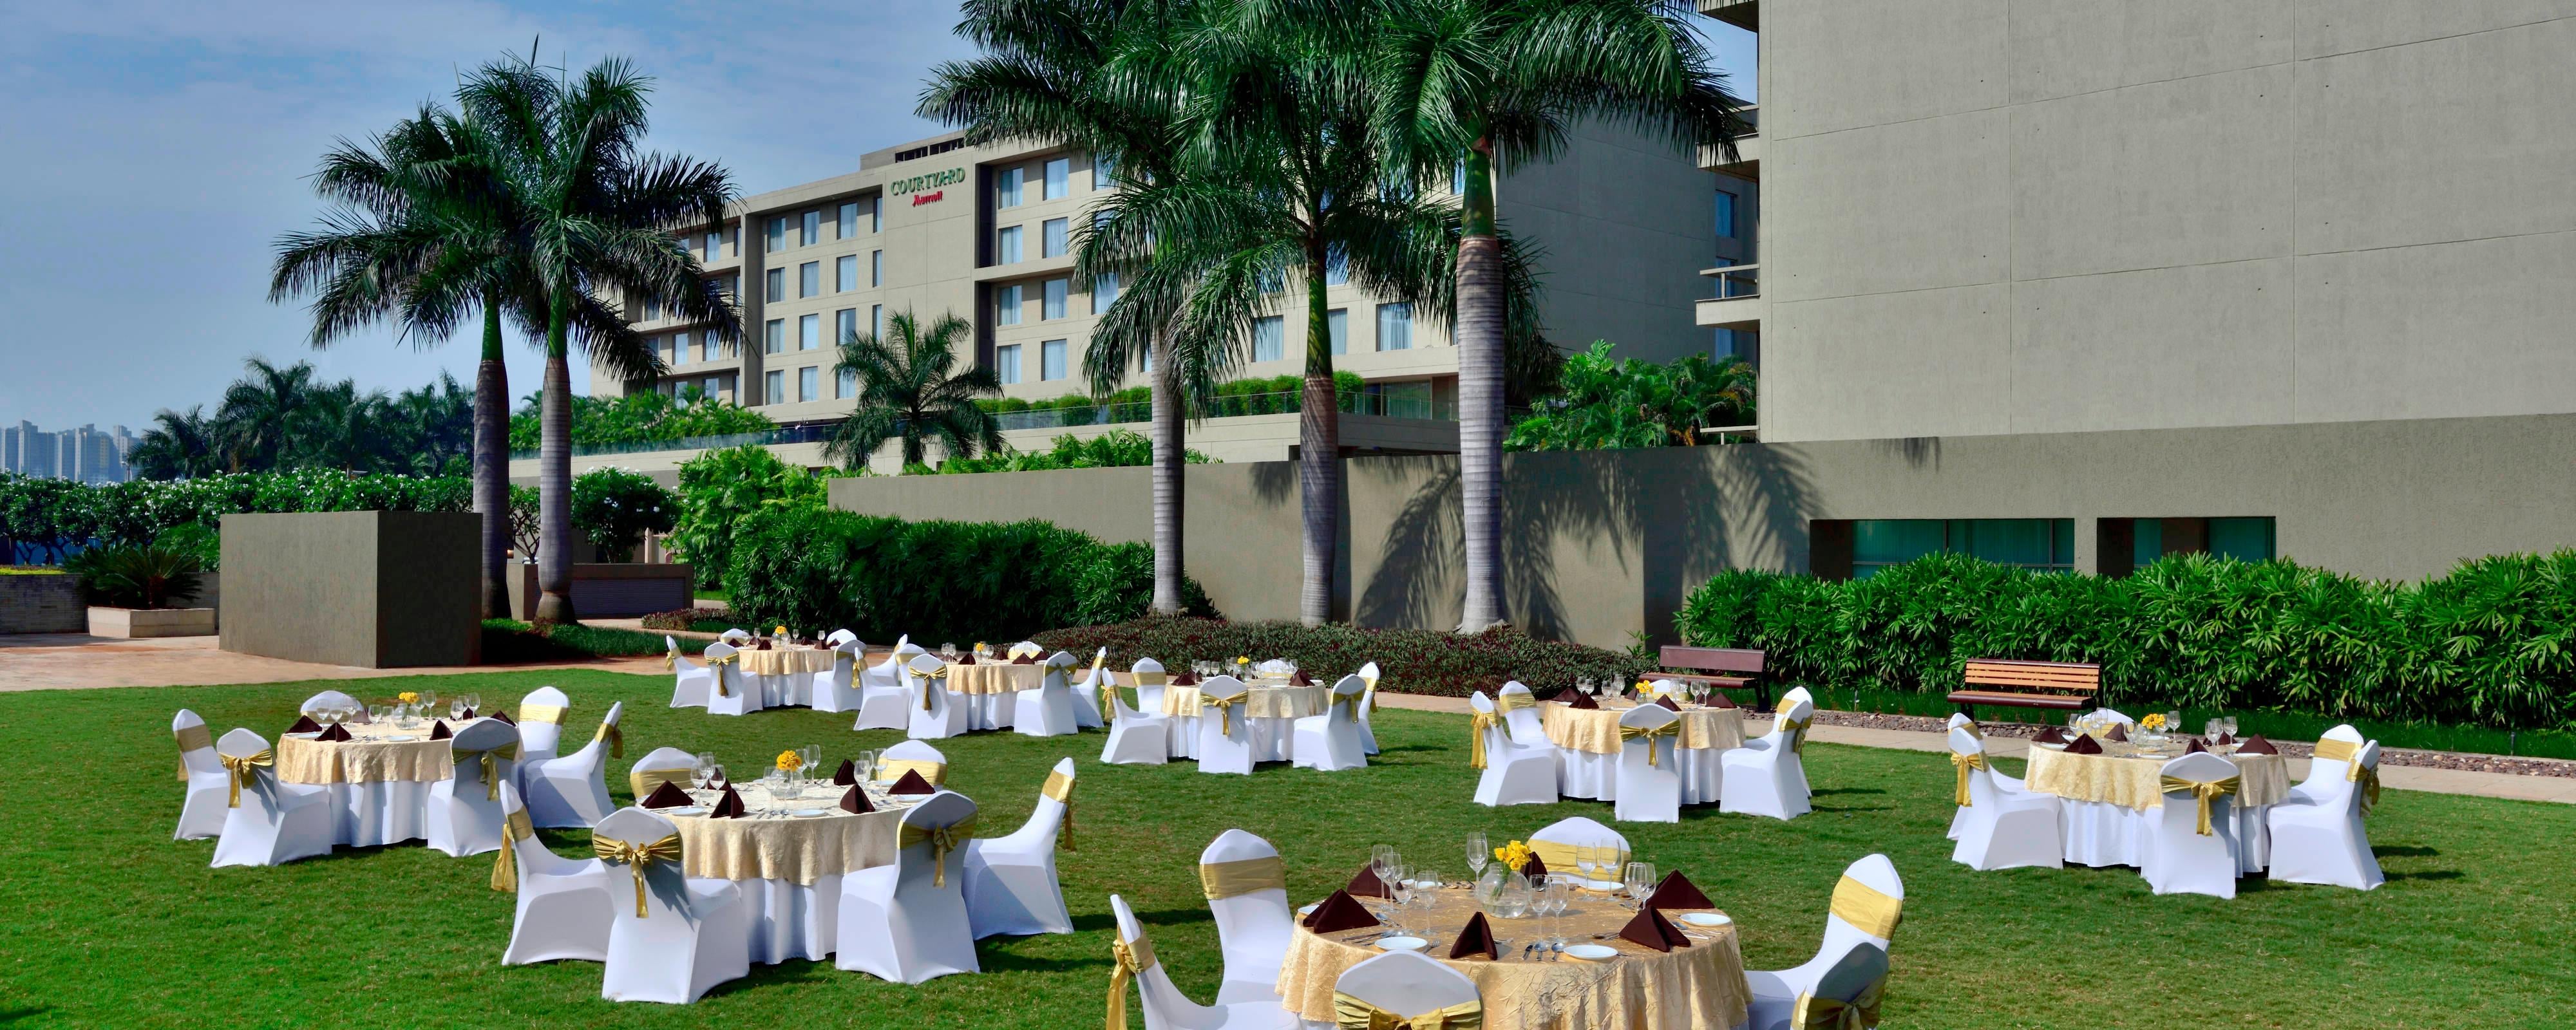 Wedding Venues in Pune, India | Courtyard by Marriott Pune ...